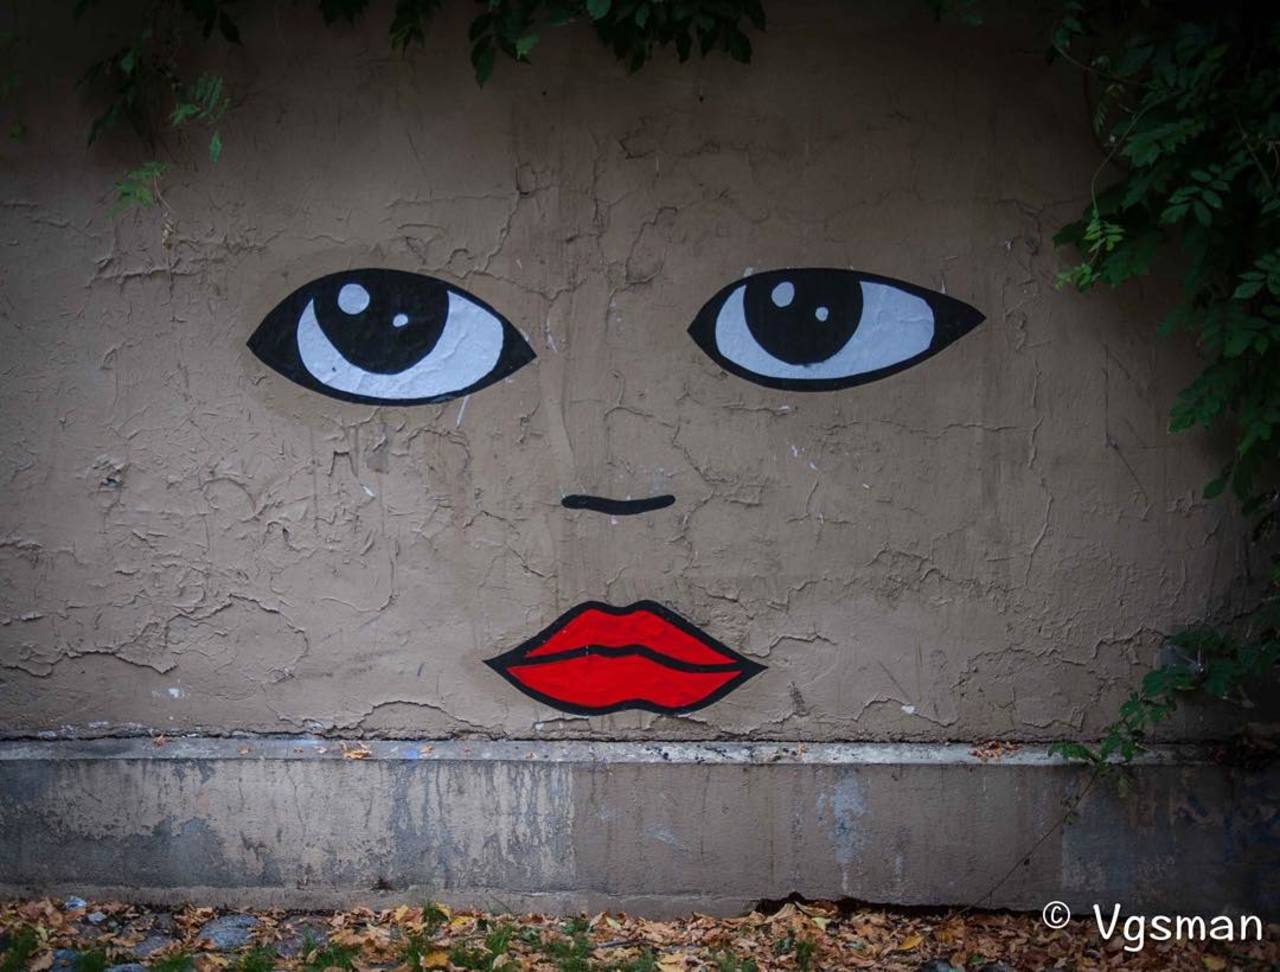 #Paris #graffiti photo by @vgsman http://ift.tt/1VygPfo #StreetArt http://t.co/jy1jDXSc1o